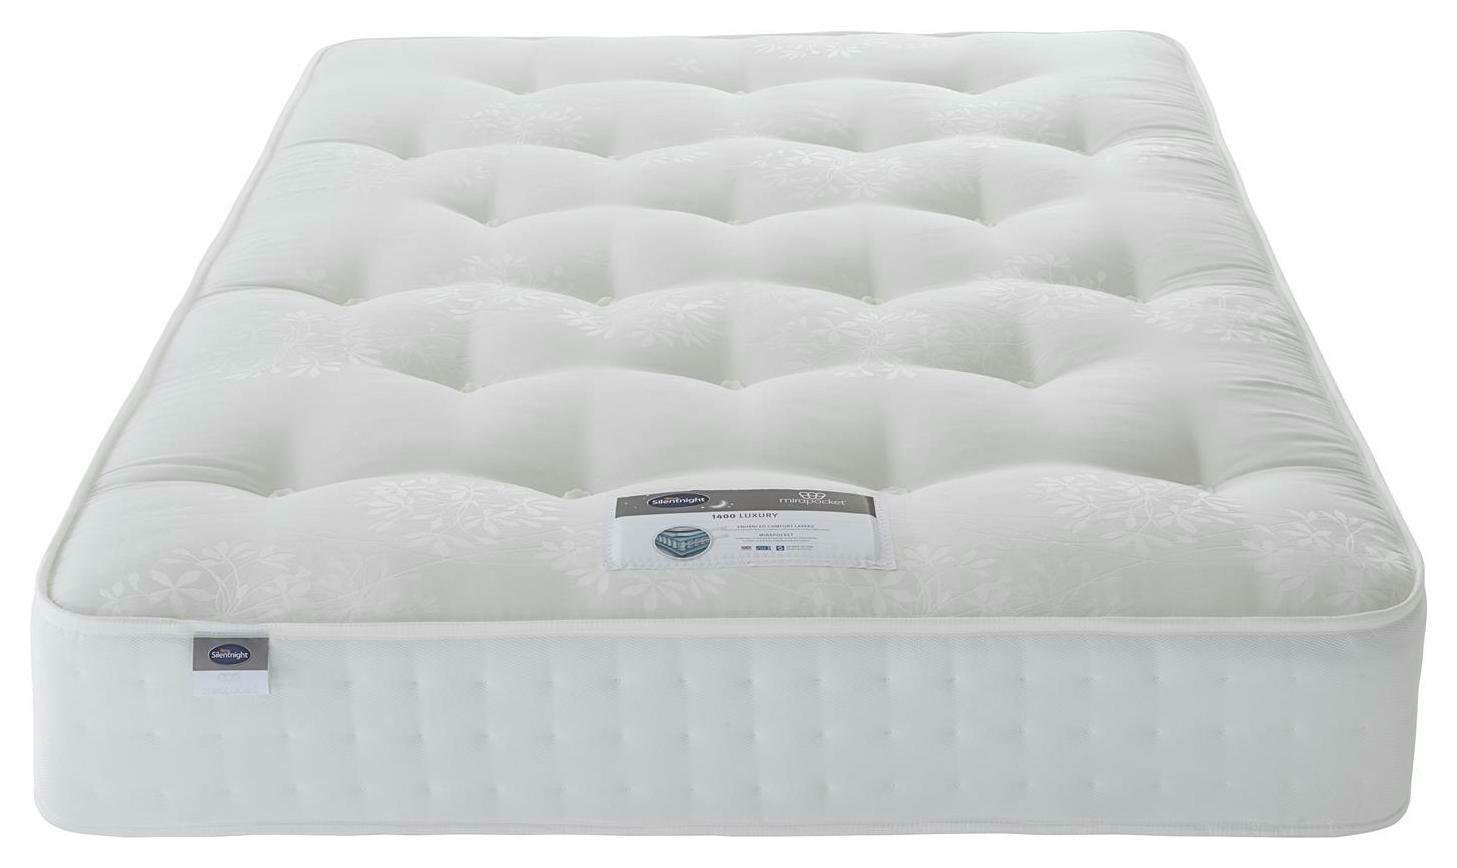 argos double mattress sale